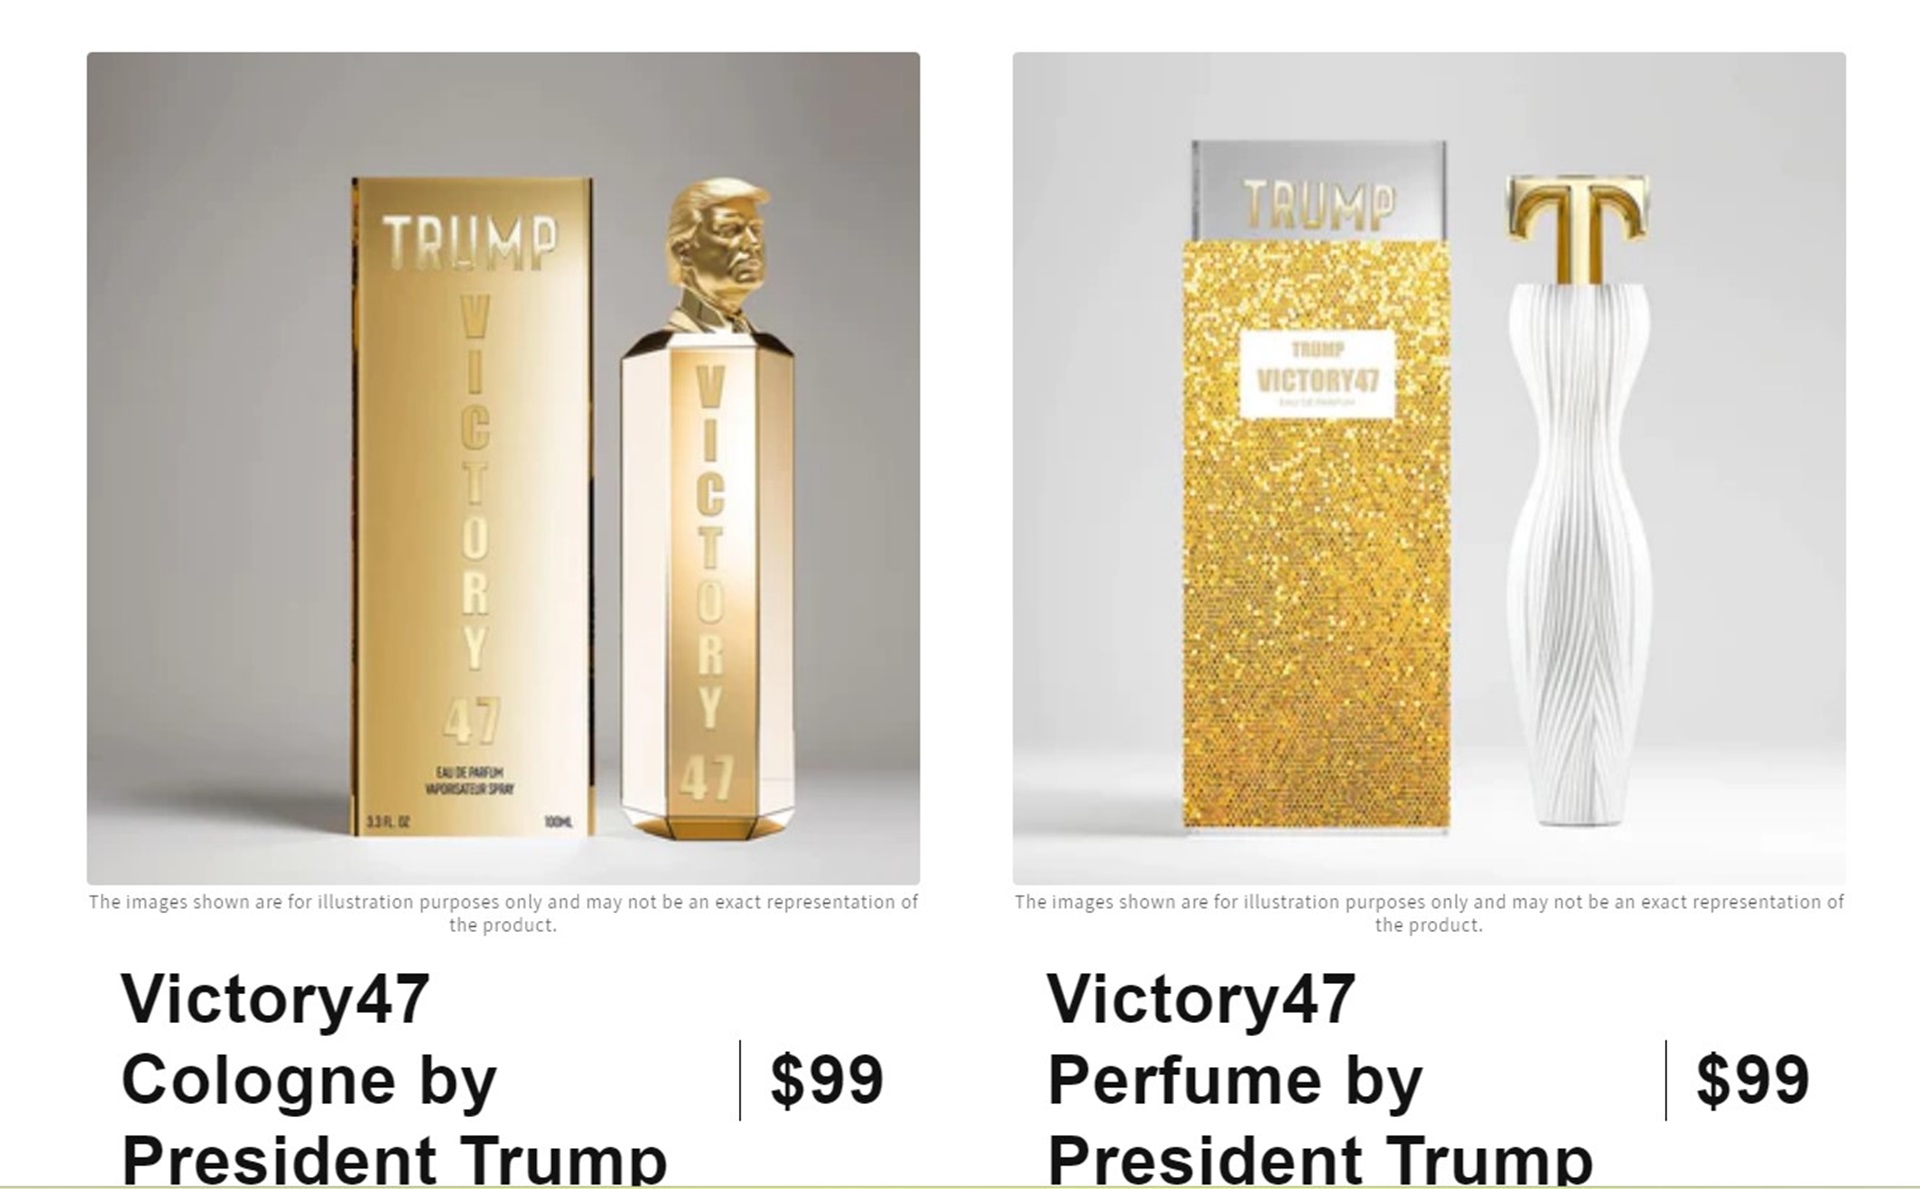 Trump perfume